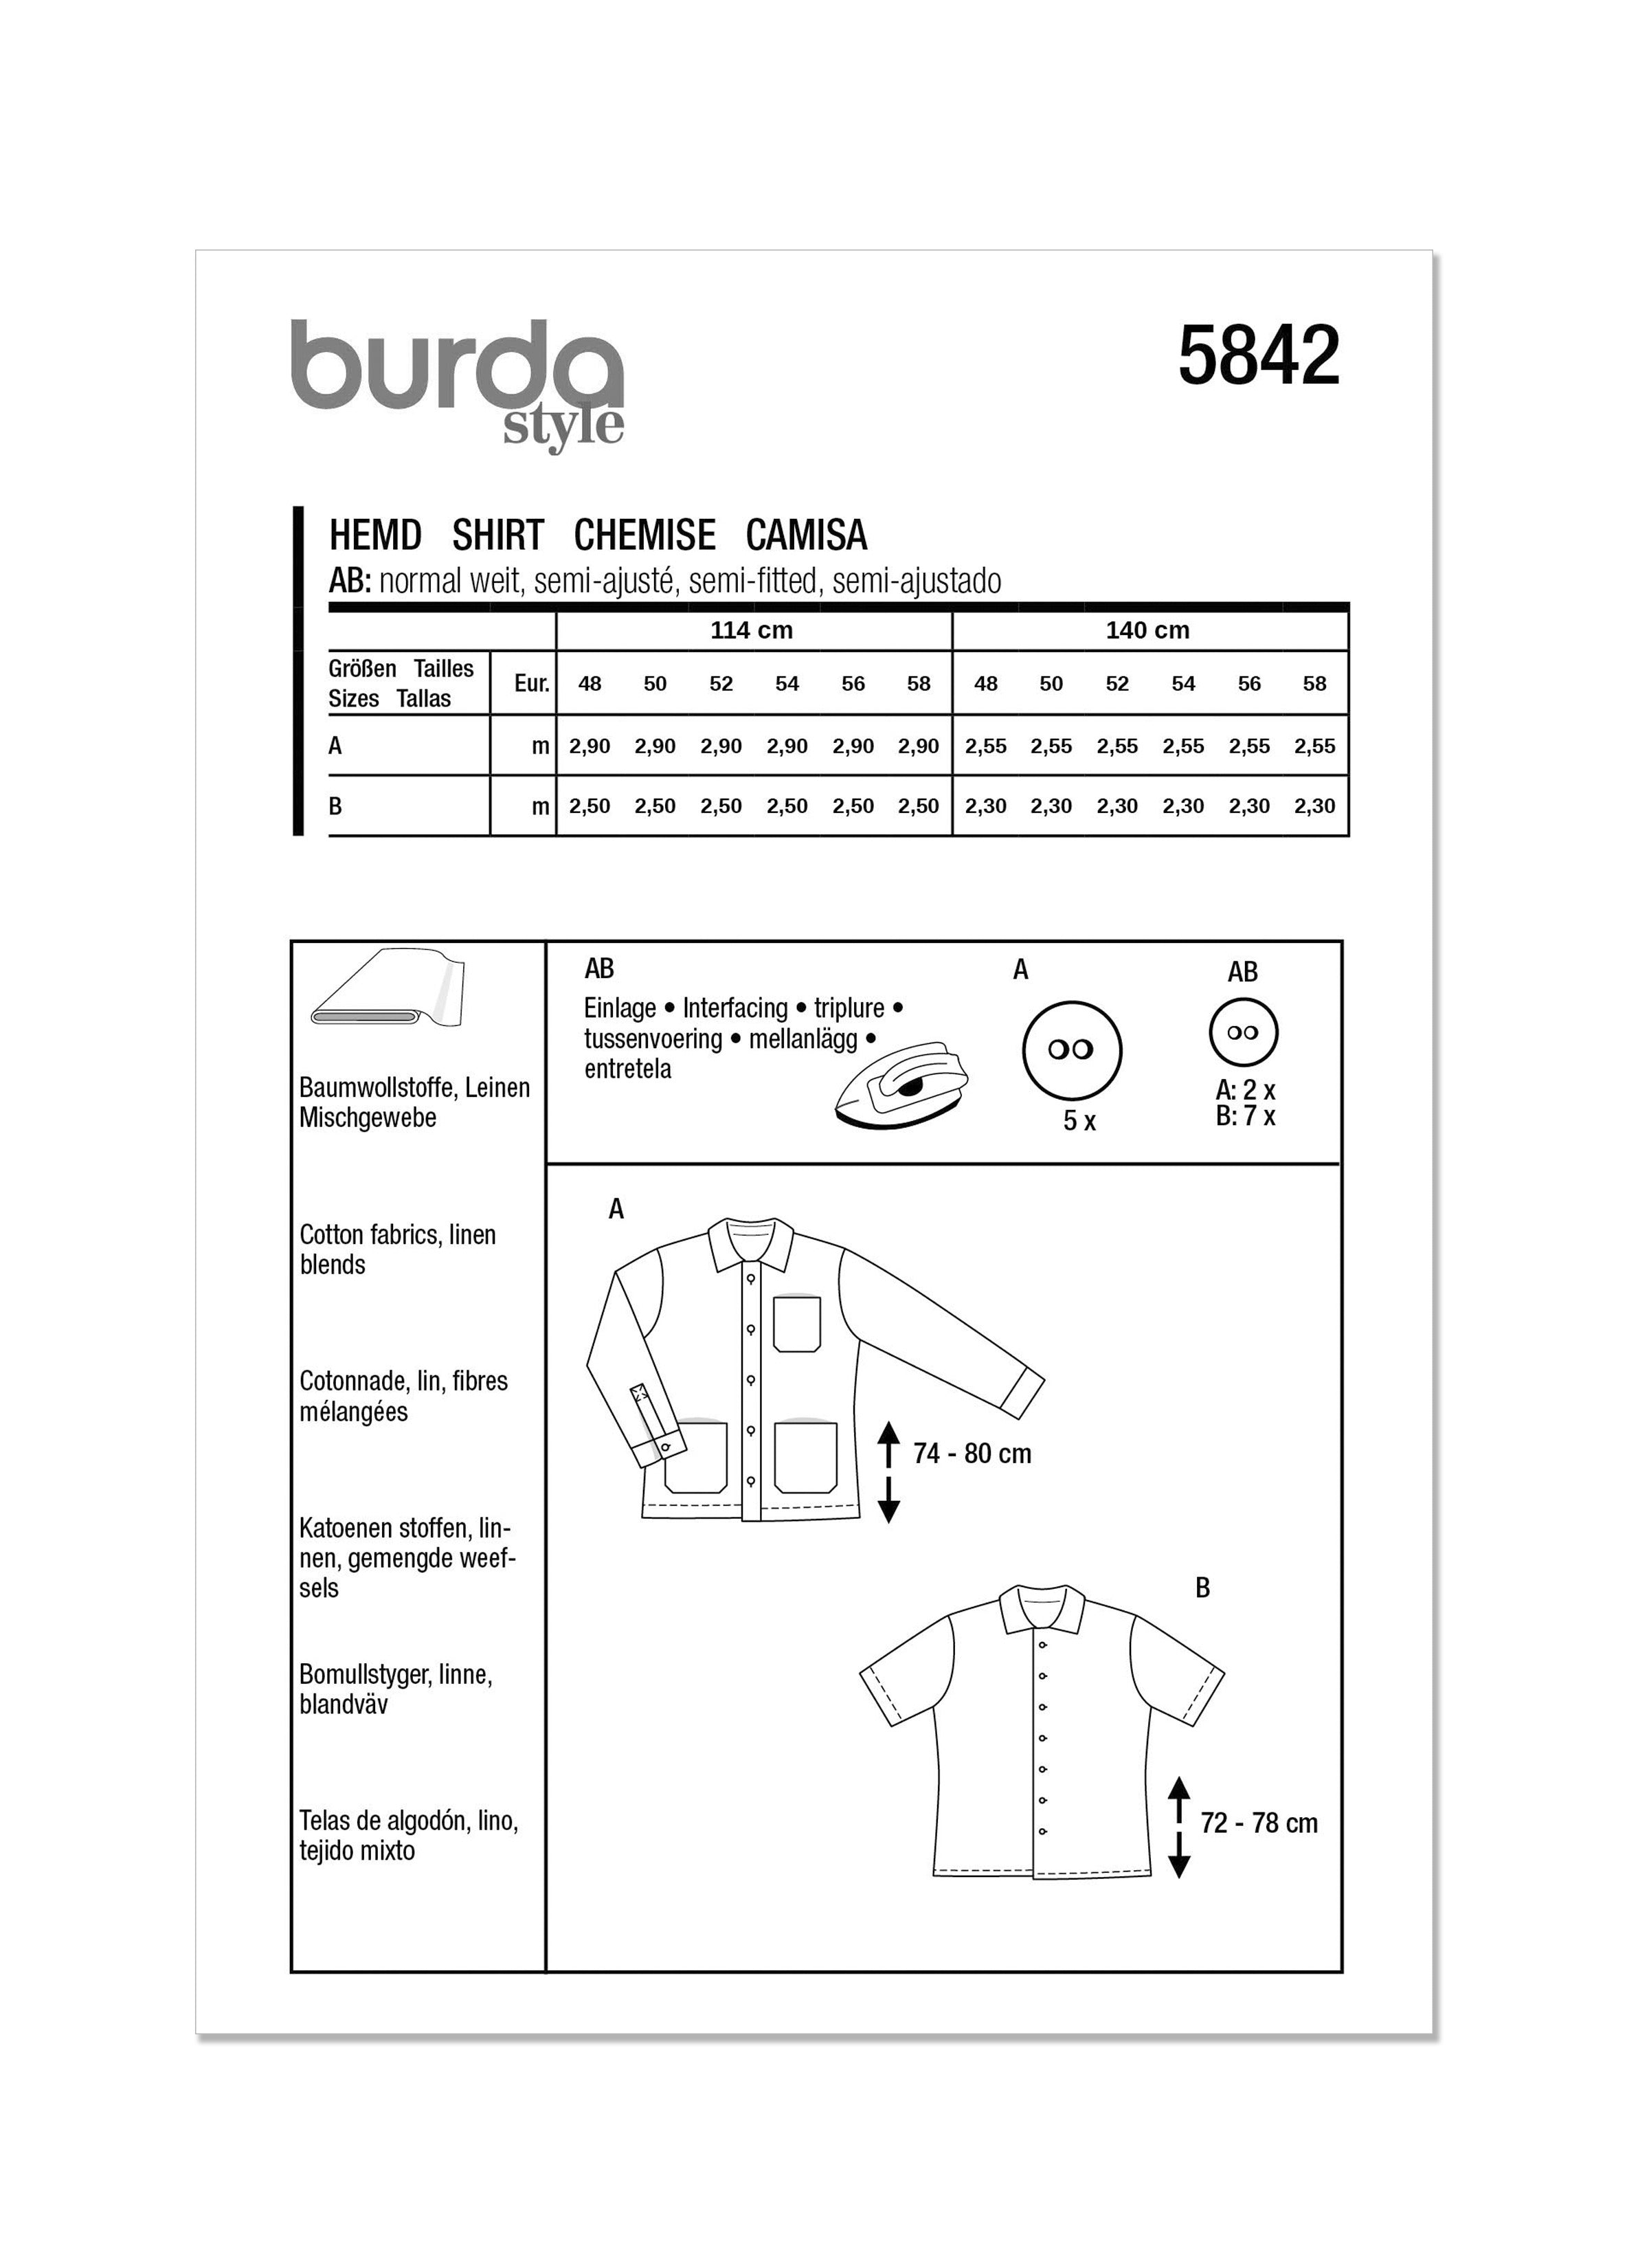 Burda Style 5842 Men's Shirt Pattern from Jaycotts Sewing Supplies